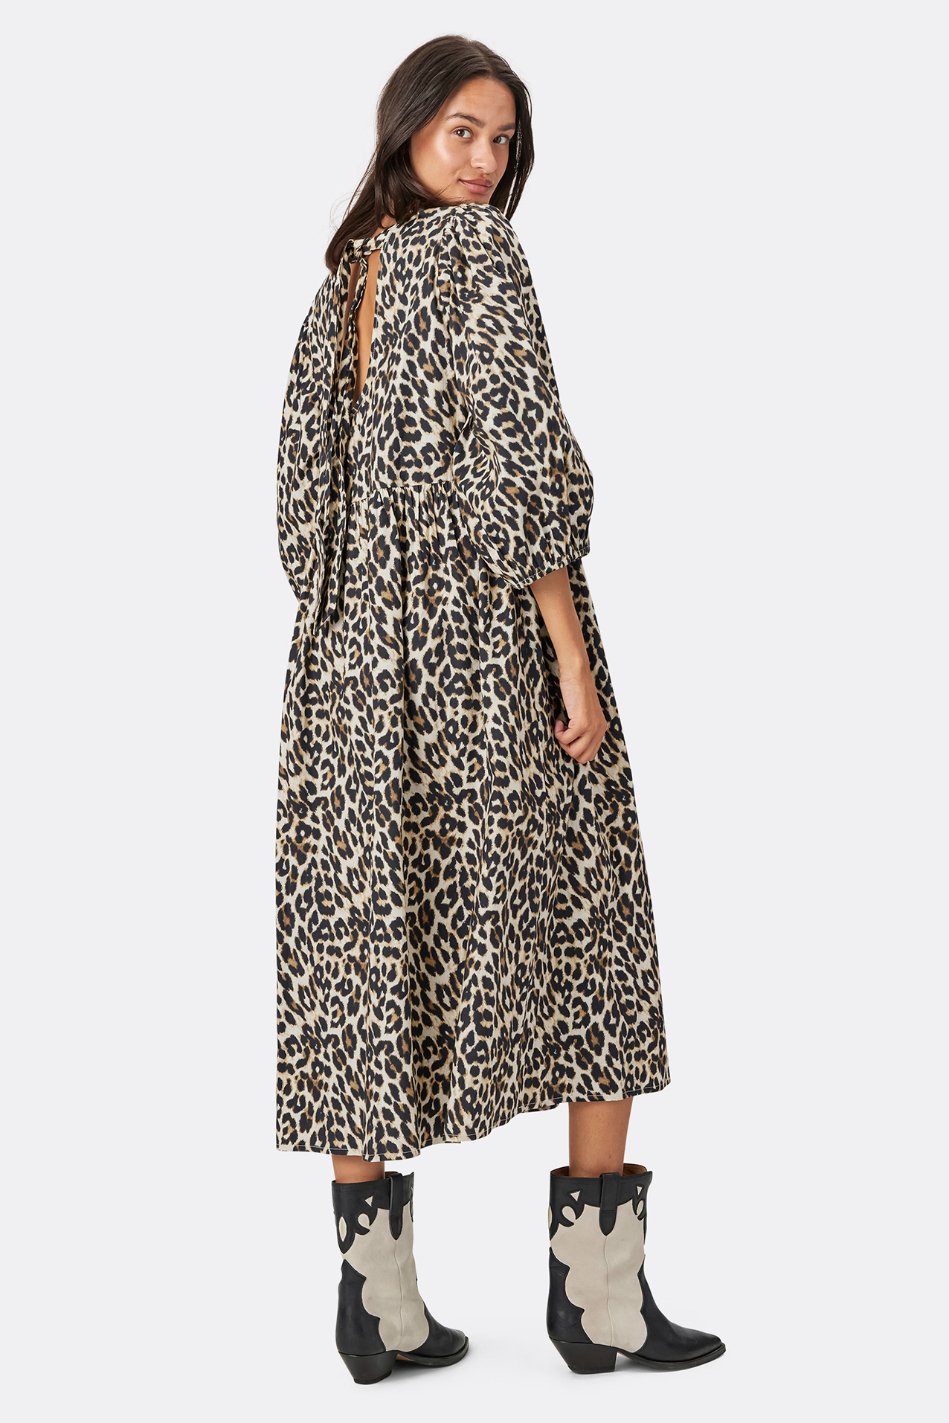 Lollys Laundry Marion Dress Leopard